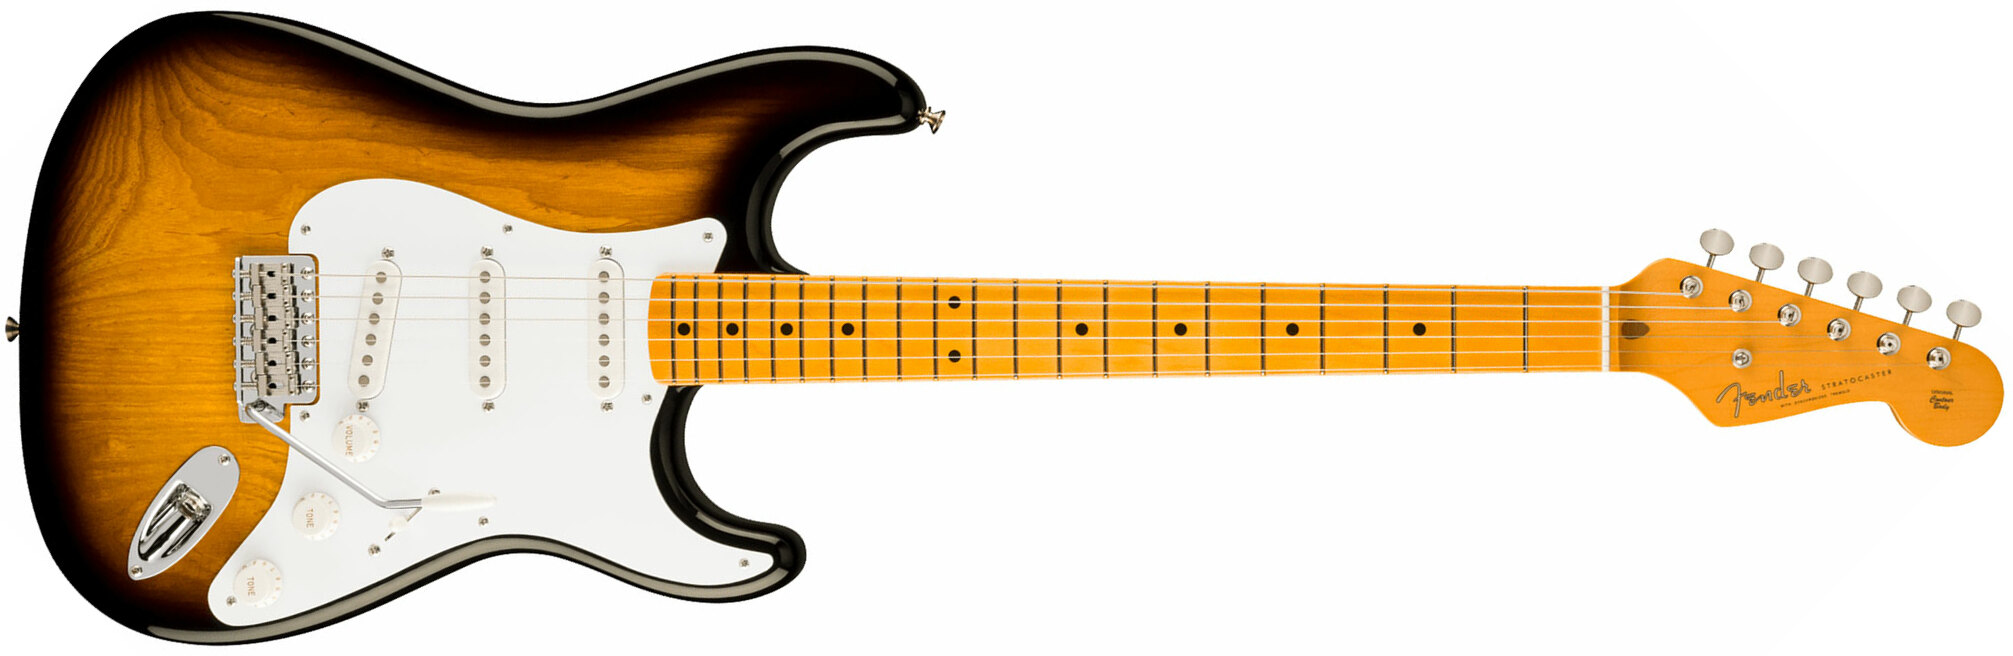 Fender Strat 1954 70th Anniversary American Vintage Ii Ltd Usa 3s Trem Mn - 2-color Sunburst - Elektrische gitaar in Str-vorm - Main picture